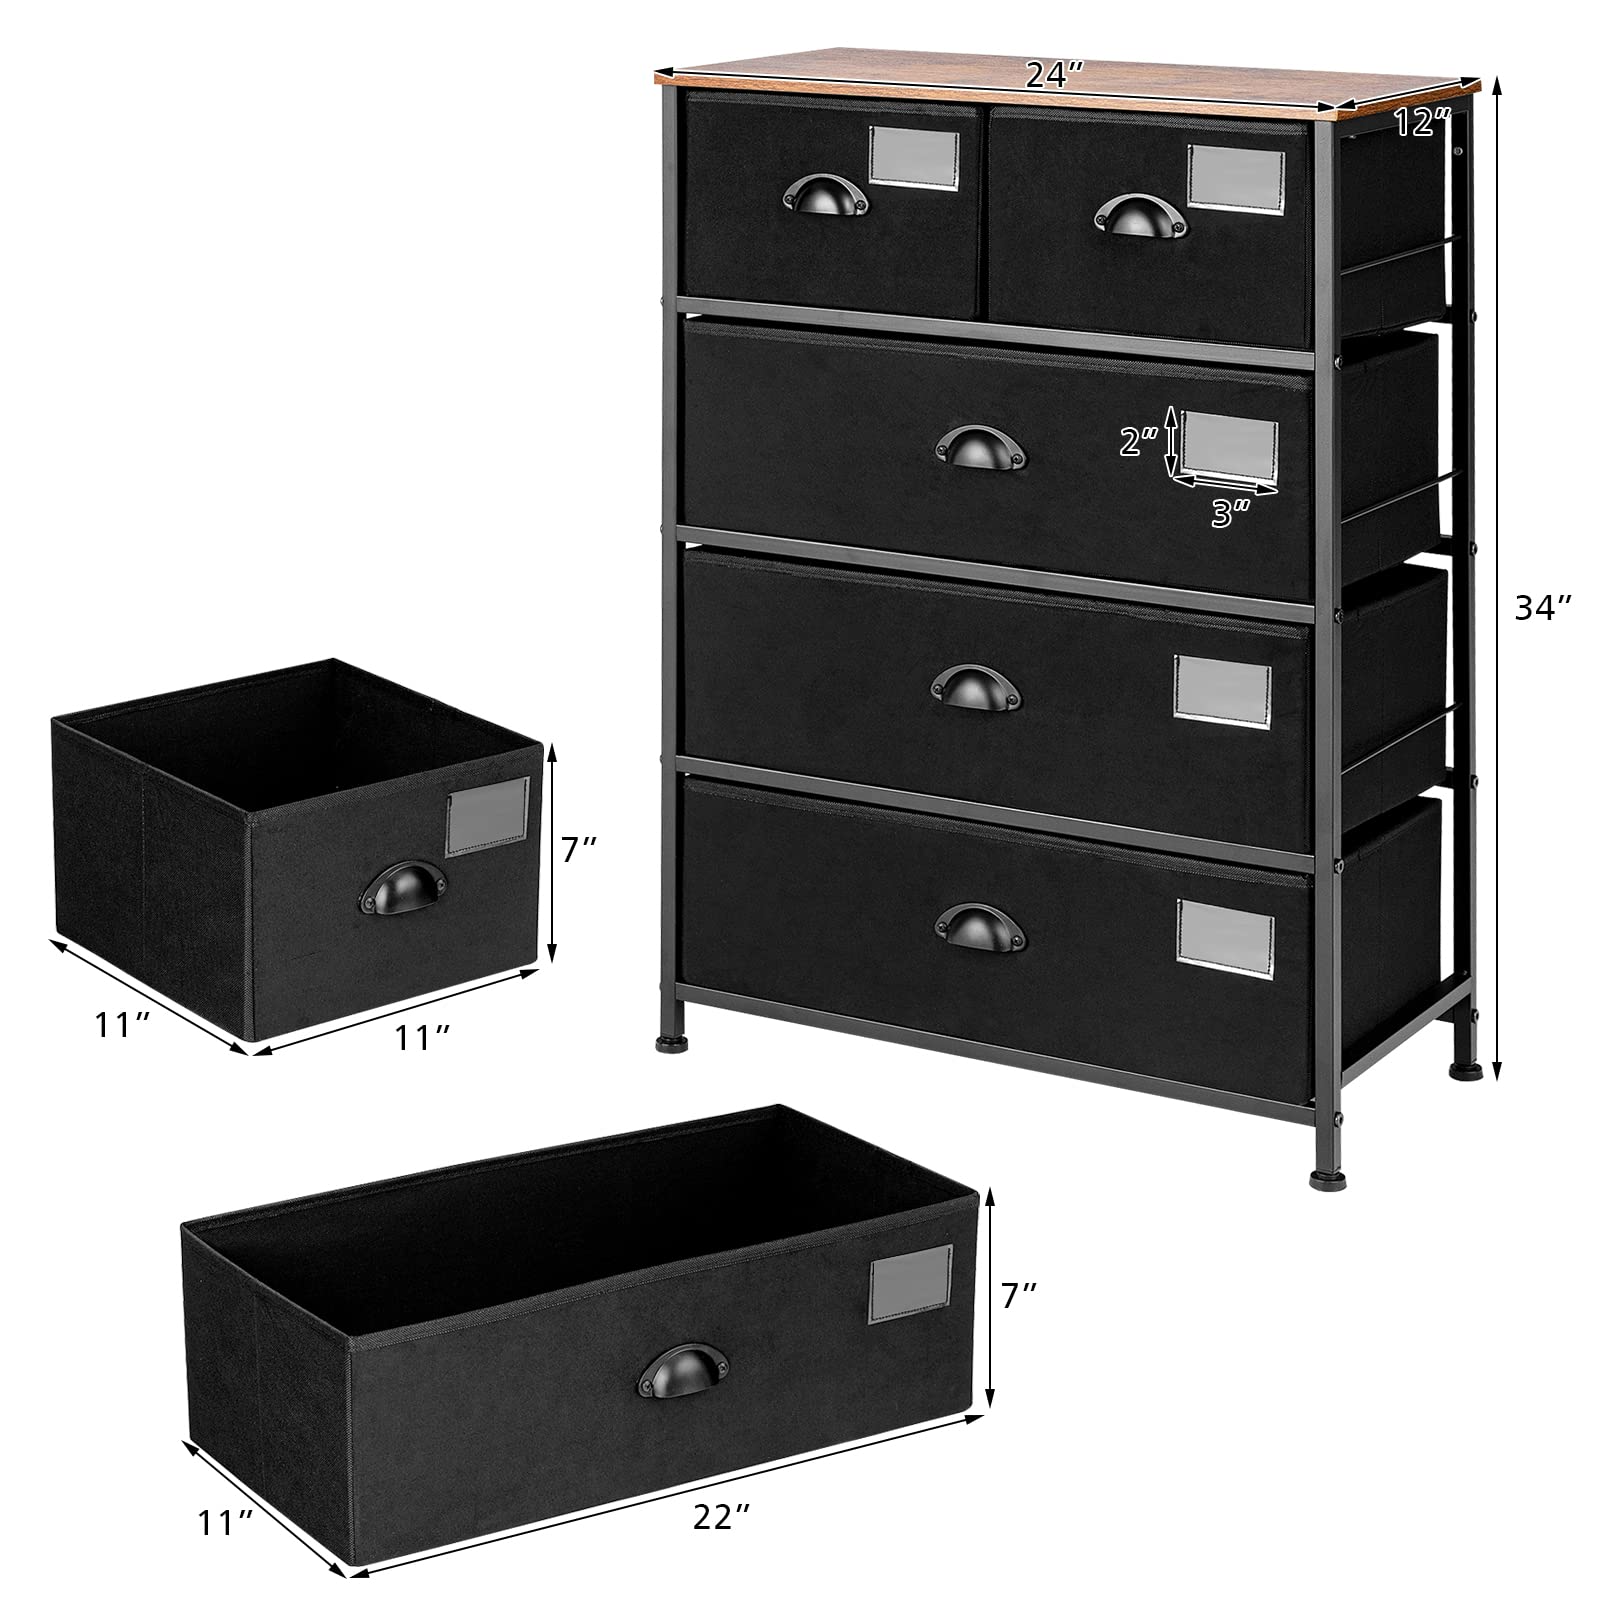 Giantex 5 drawer Dresser Fabric Storage Organizer with Adjustable Foot Pads & Folding Bin